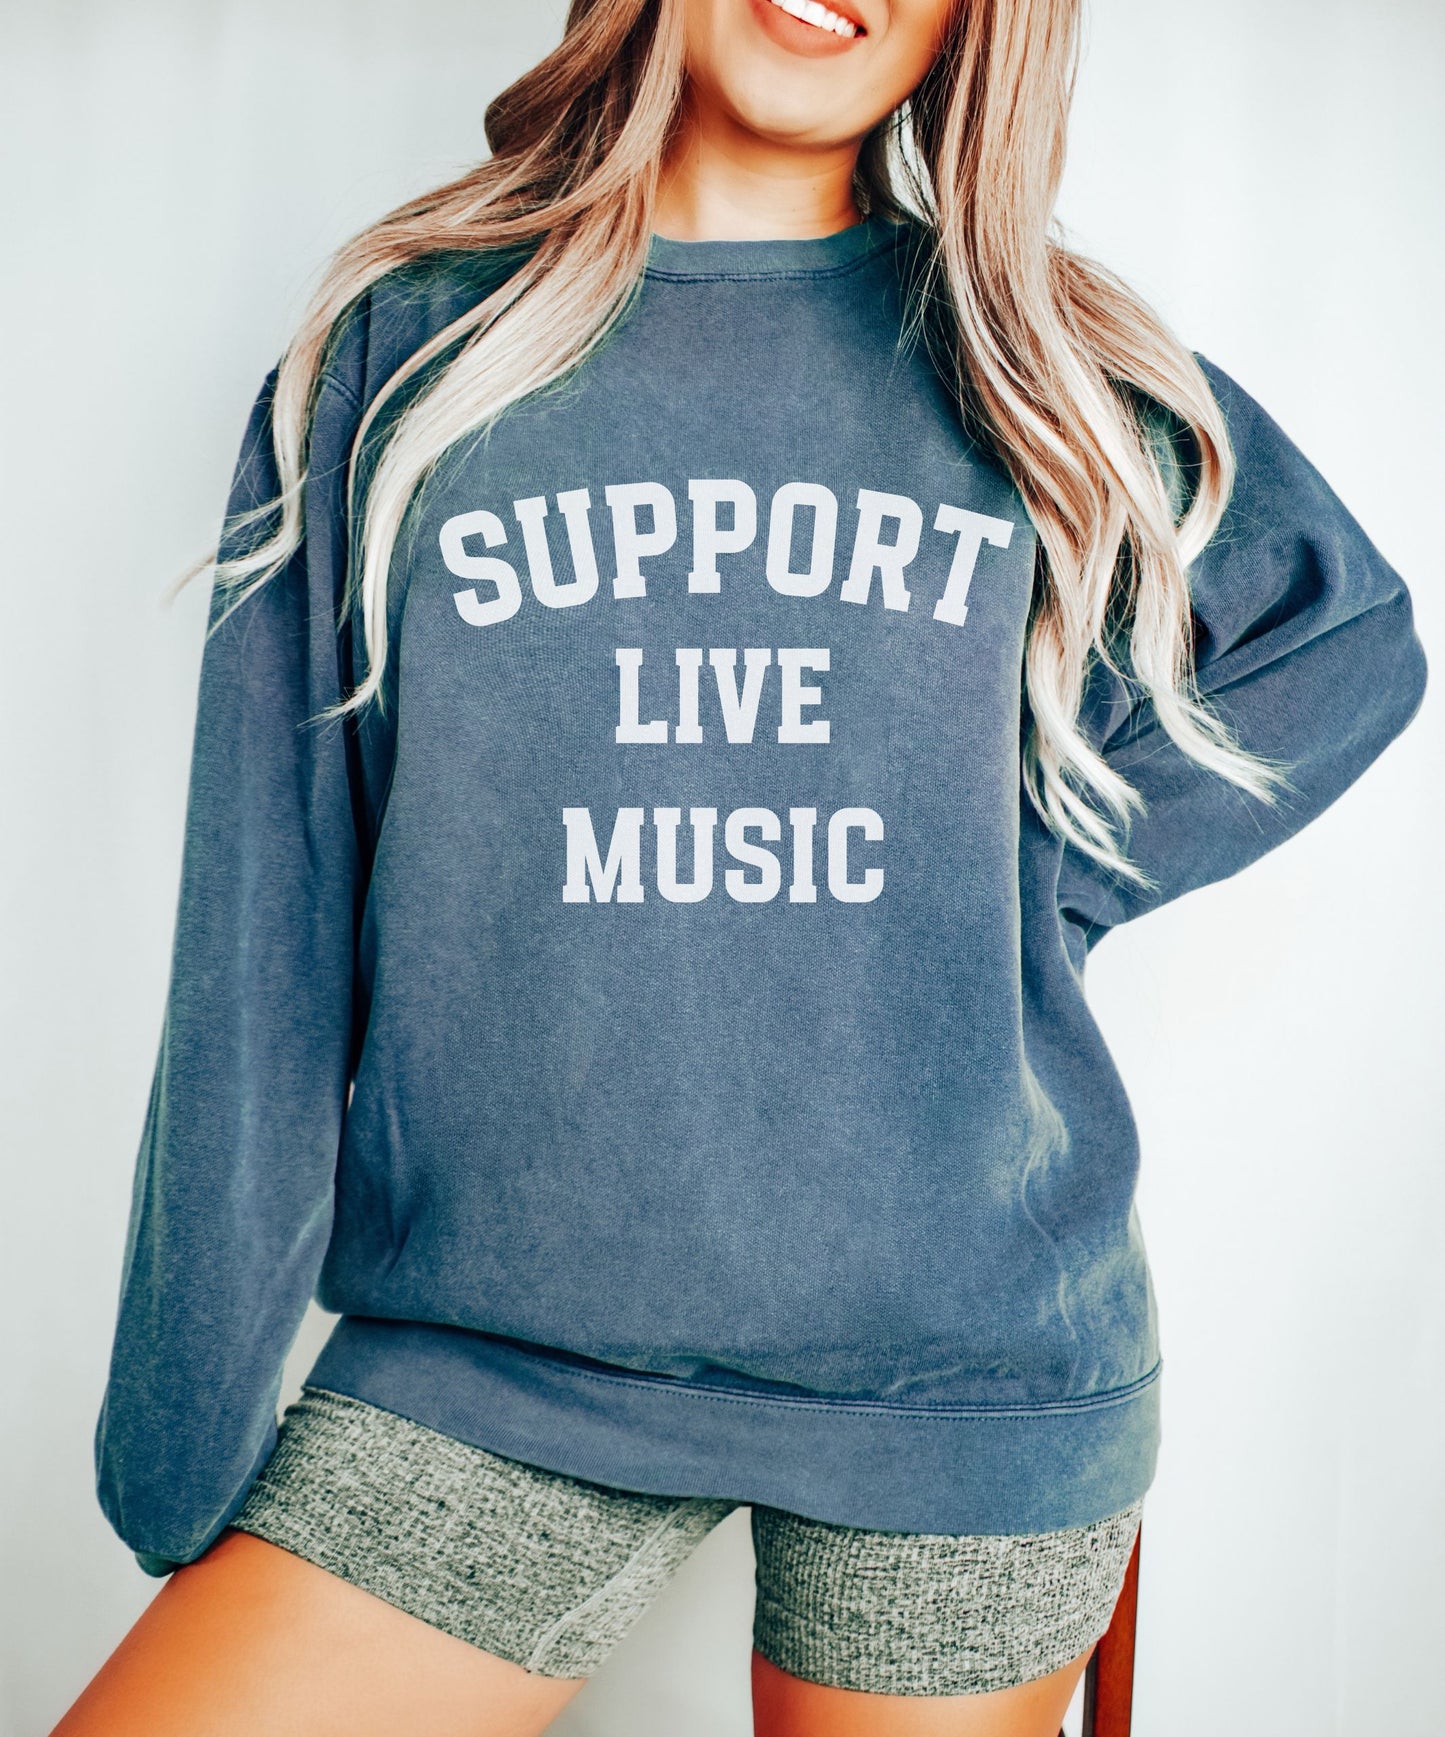 Support Live Music Sweatshirt